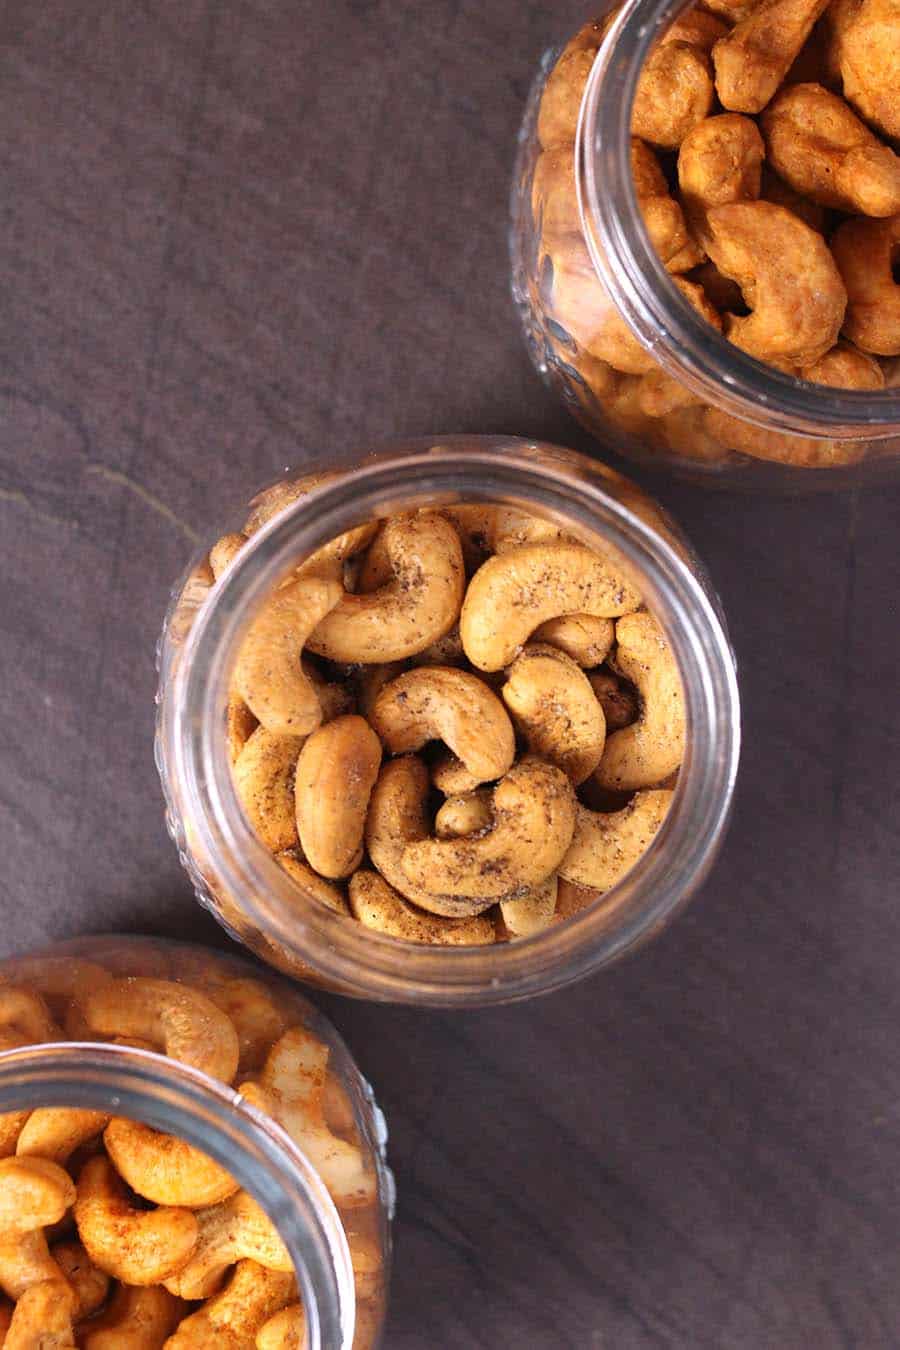 Cashew nuts - best gourmet food gift idea for Diwali, Holi, Thanksgiving, Christmas, wedding 